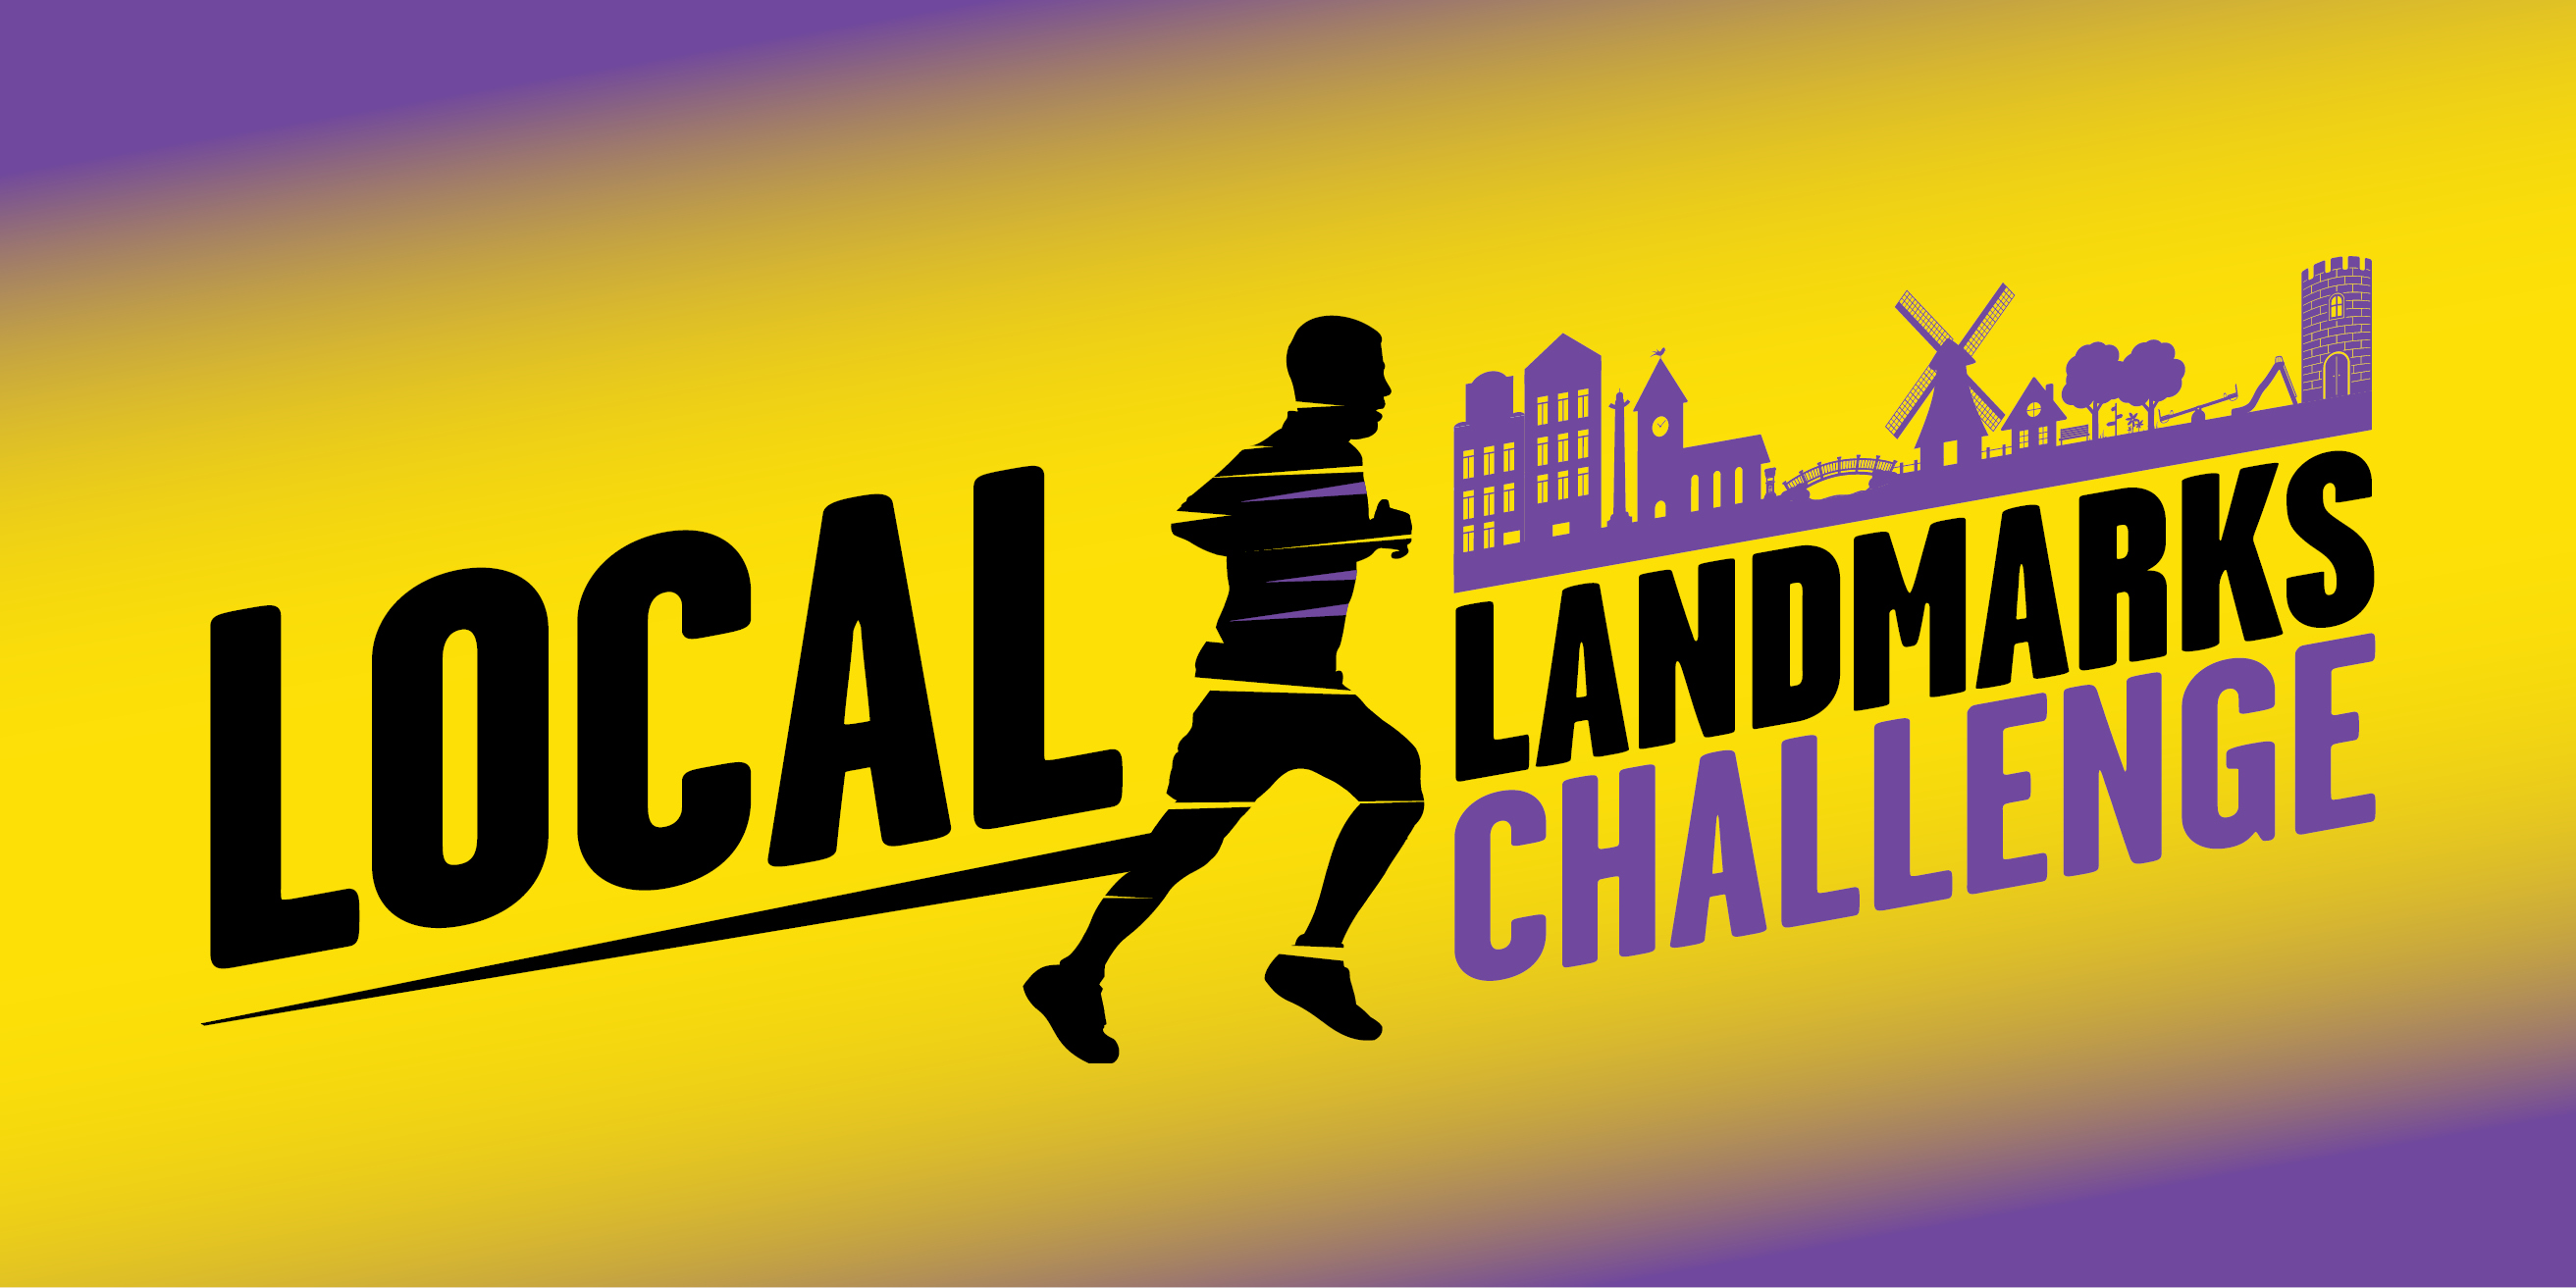 Local Landmarks Challenge